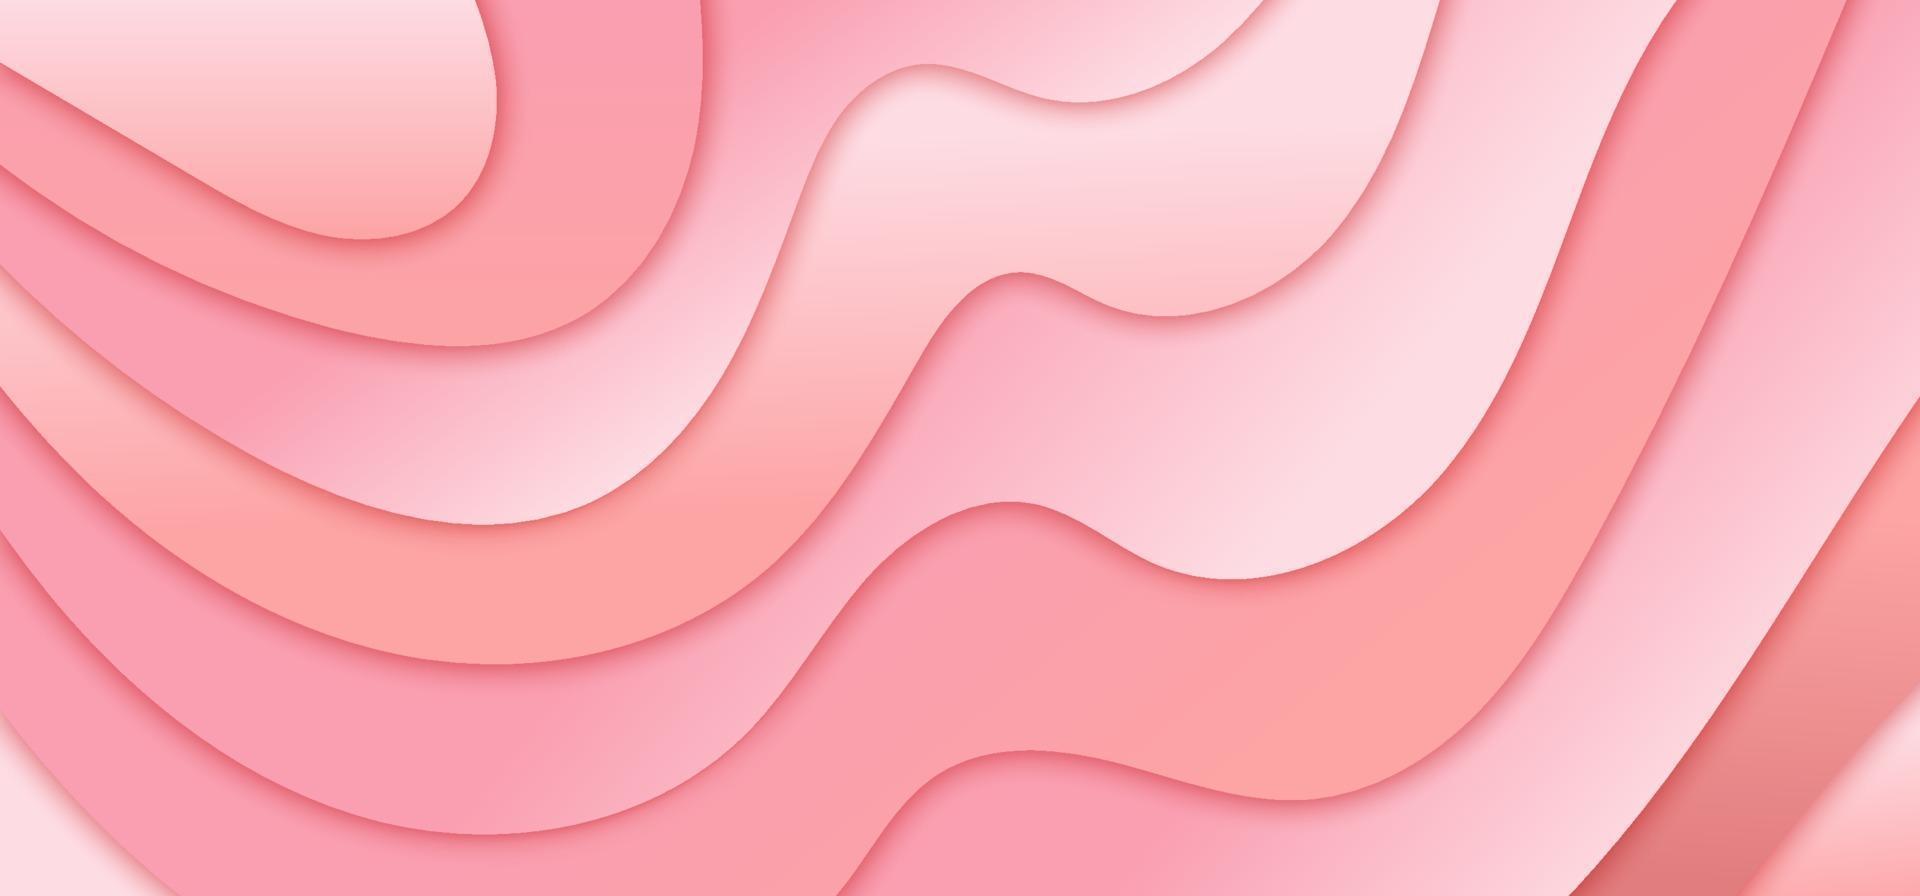 desenho de bandeira abstrata elegante. estilo de papel rosa suave, fundo de camadas de onda e textura. vetor